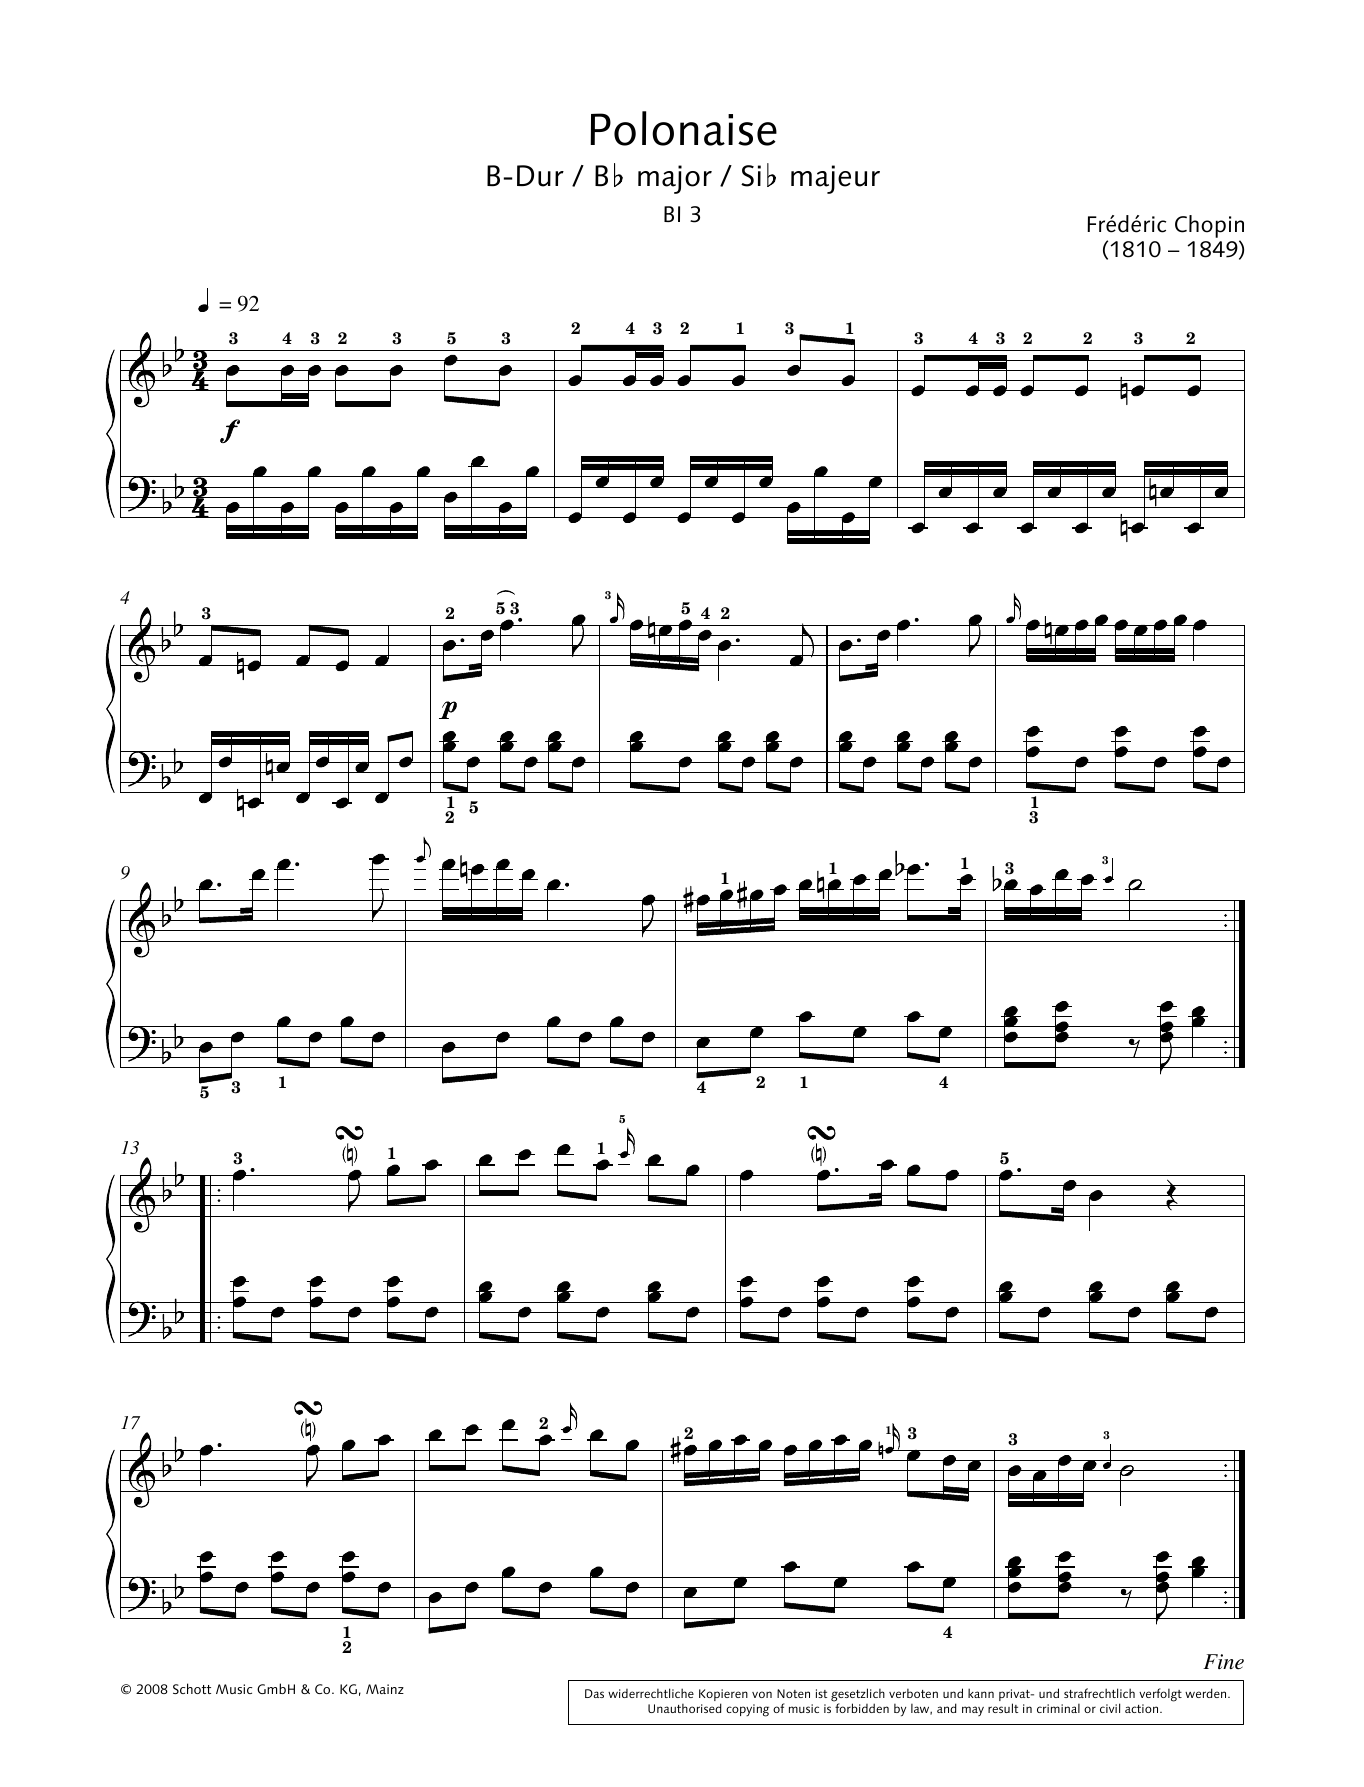 Hans-Gunter Heumann Polonaise in B-flat major Sheet Music Notes & Chords for Piano Solo - Download or Print PDF